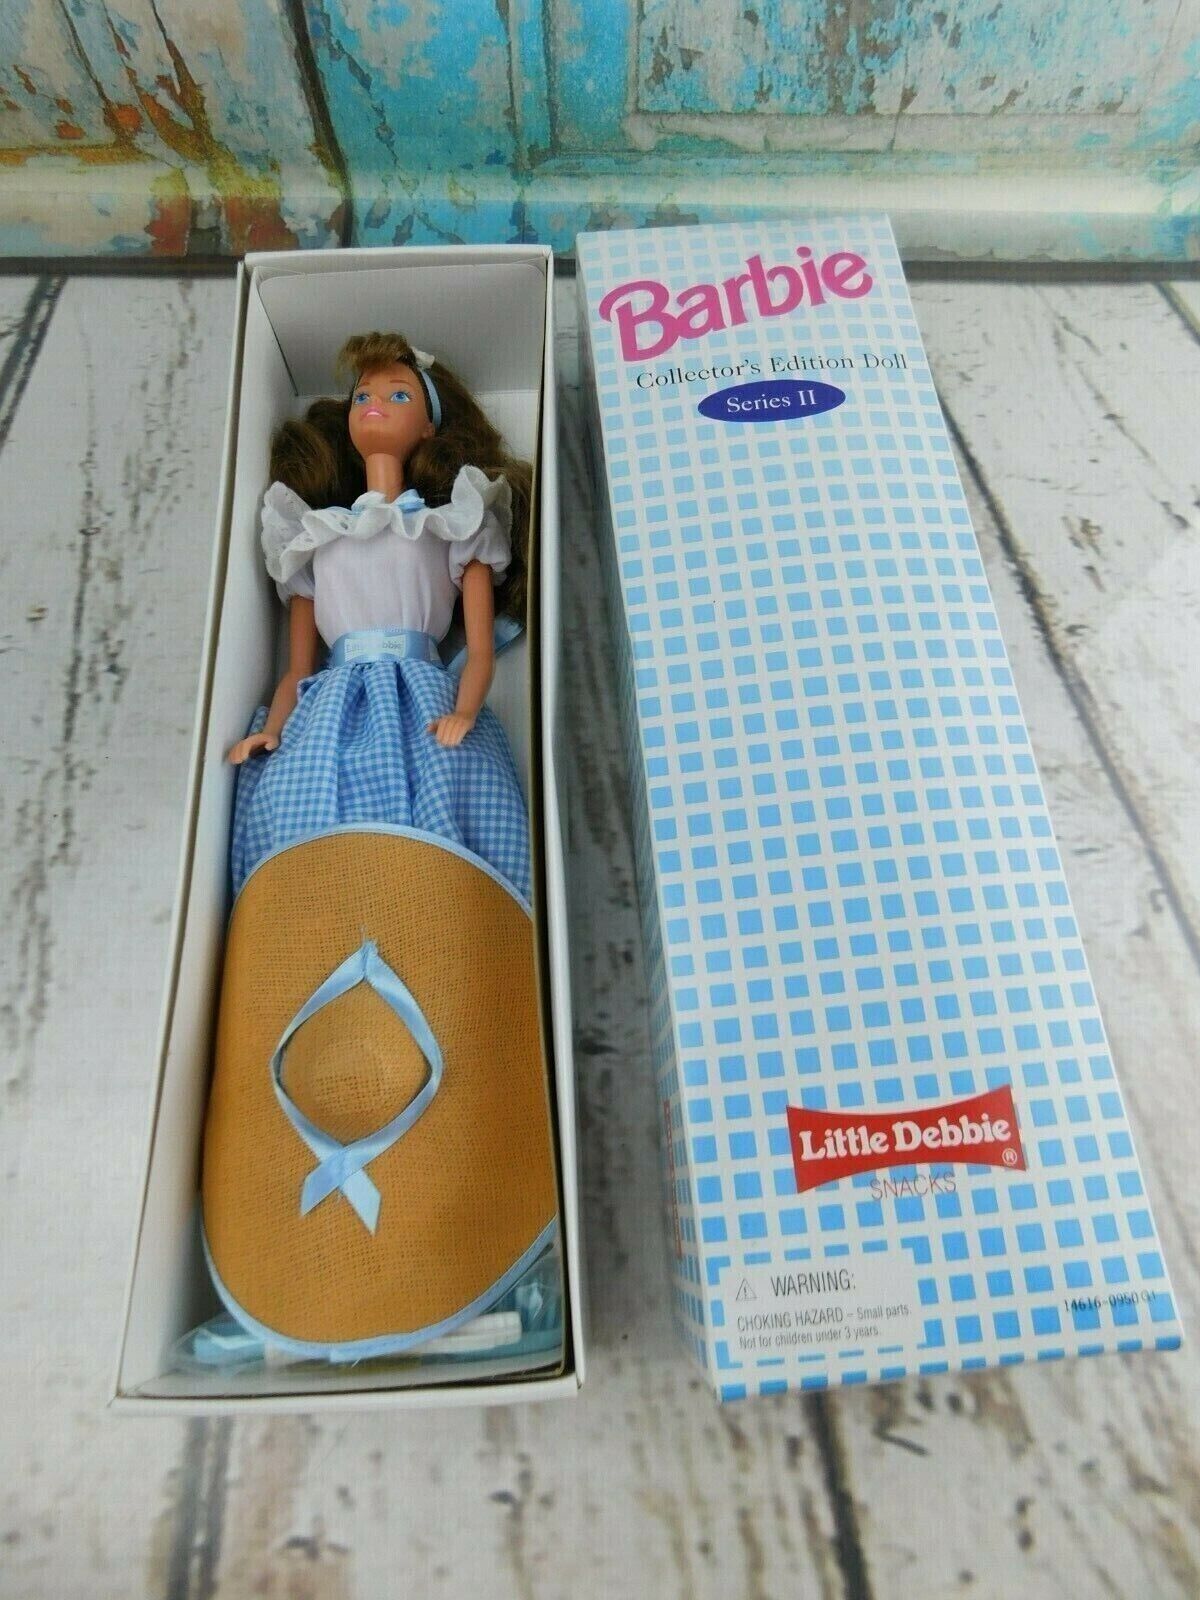 Barbie Mattel Little Debbie Collectors Edition Series II 1995 Barbie Doll NIB